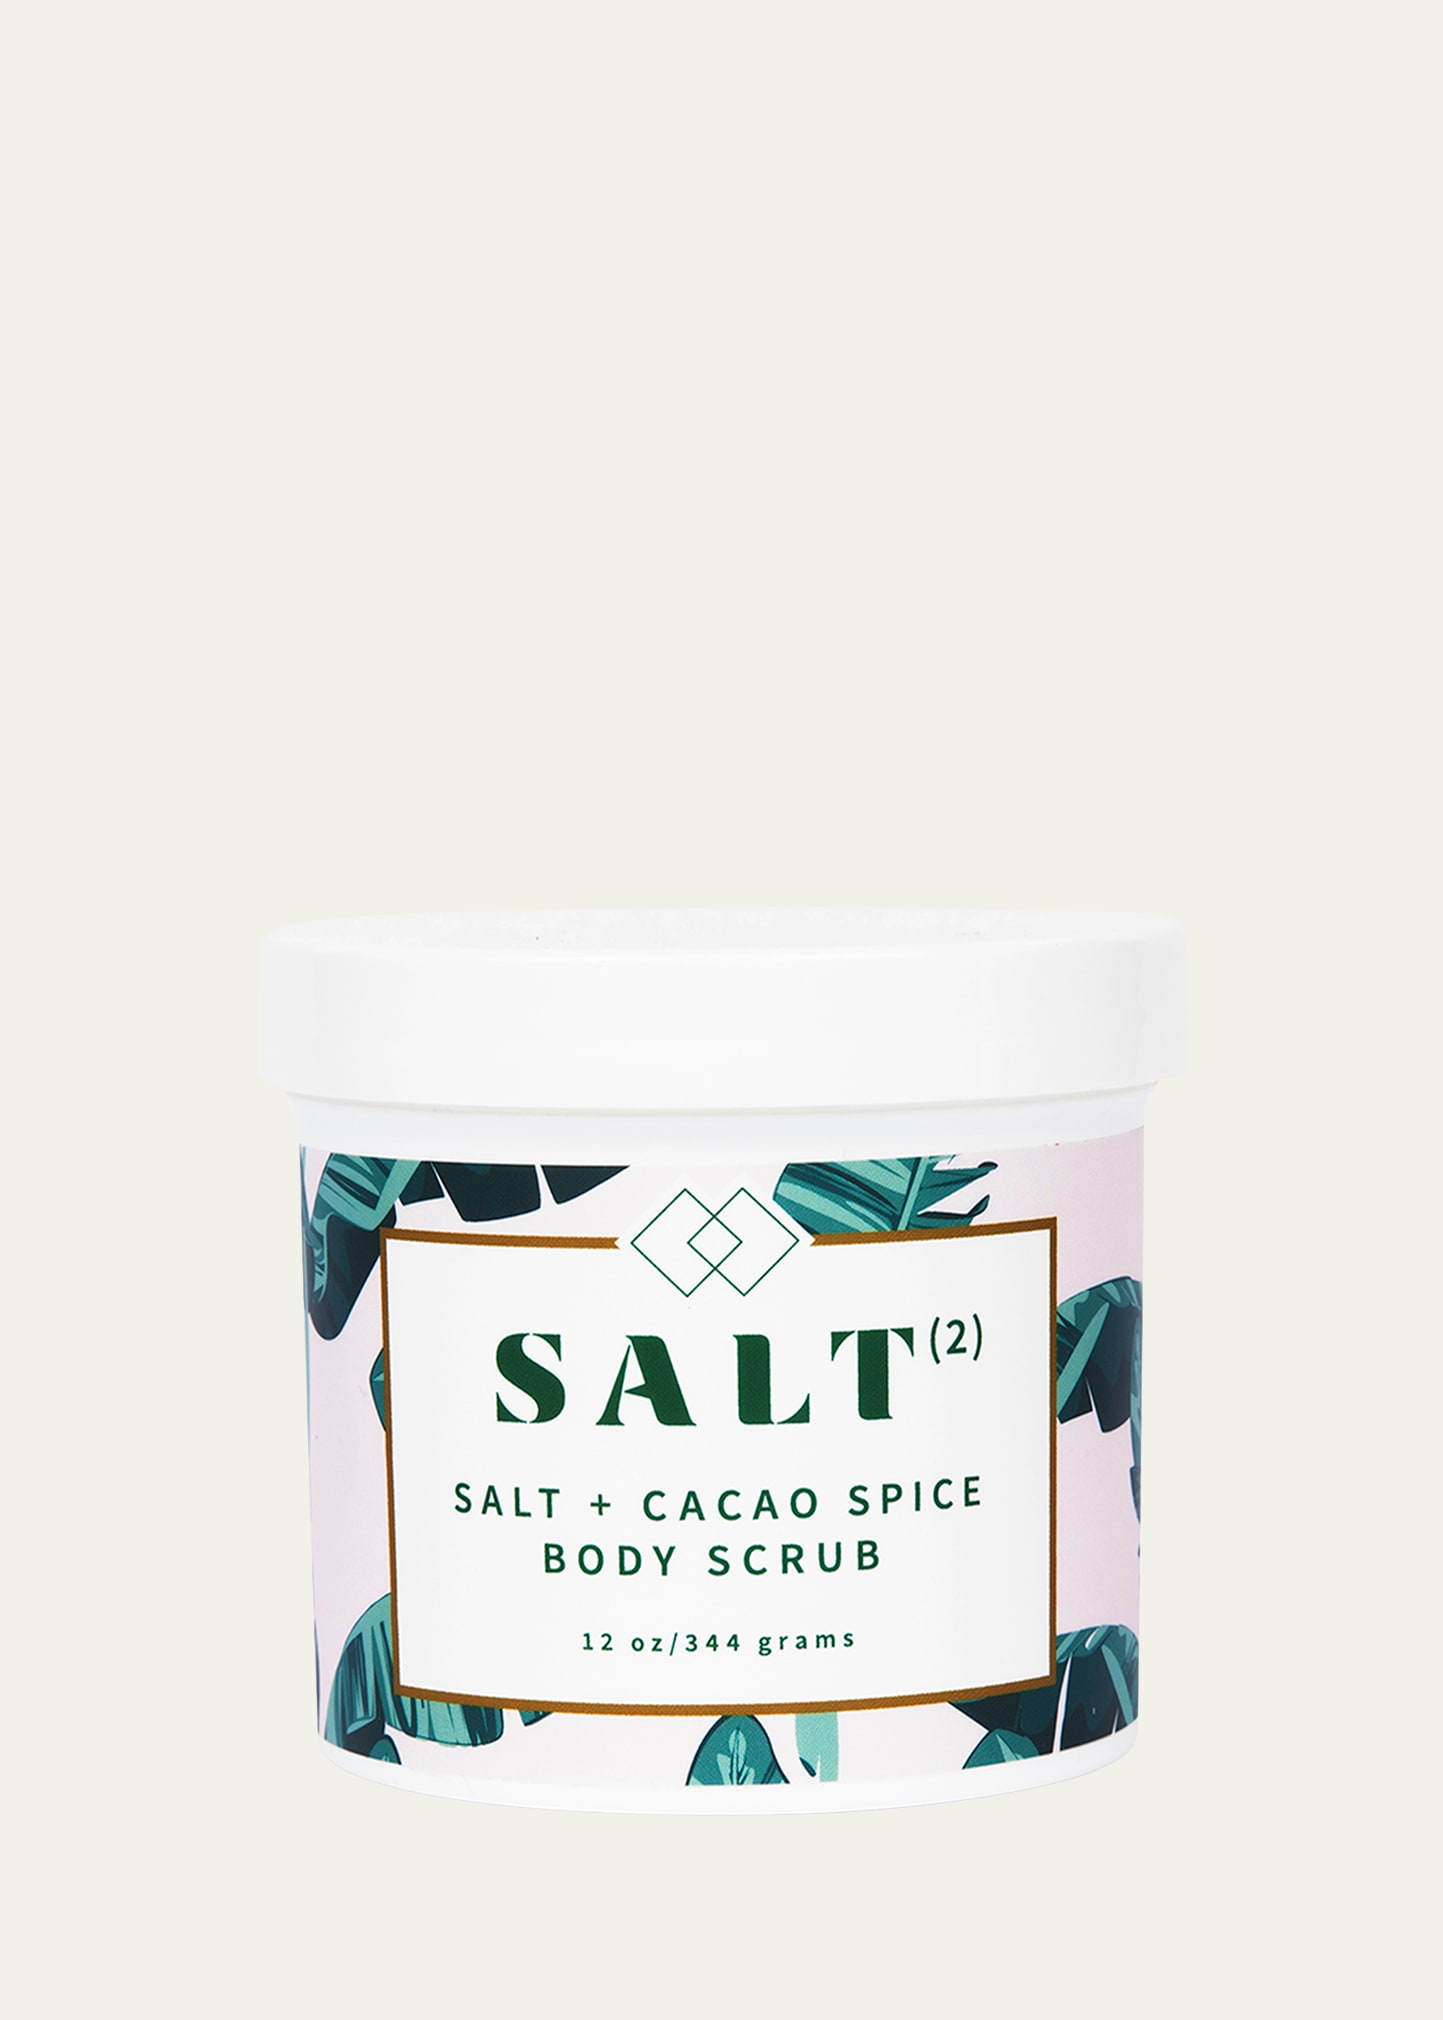 Salt and Cacao Spice Body Scrub, 12 oz.